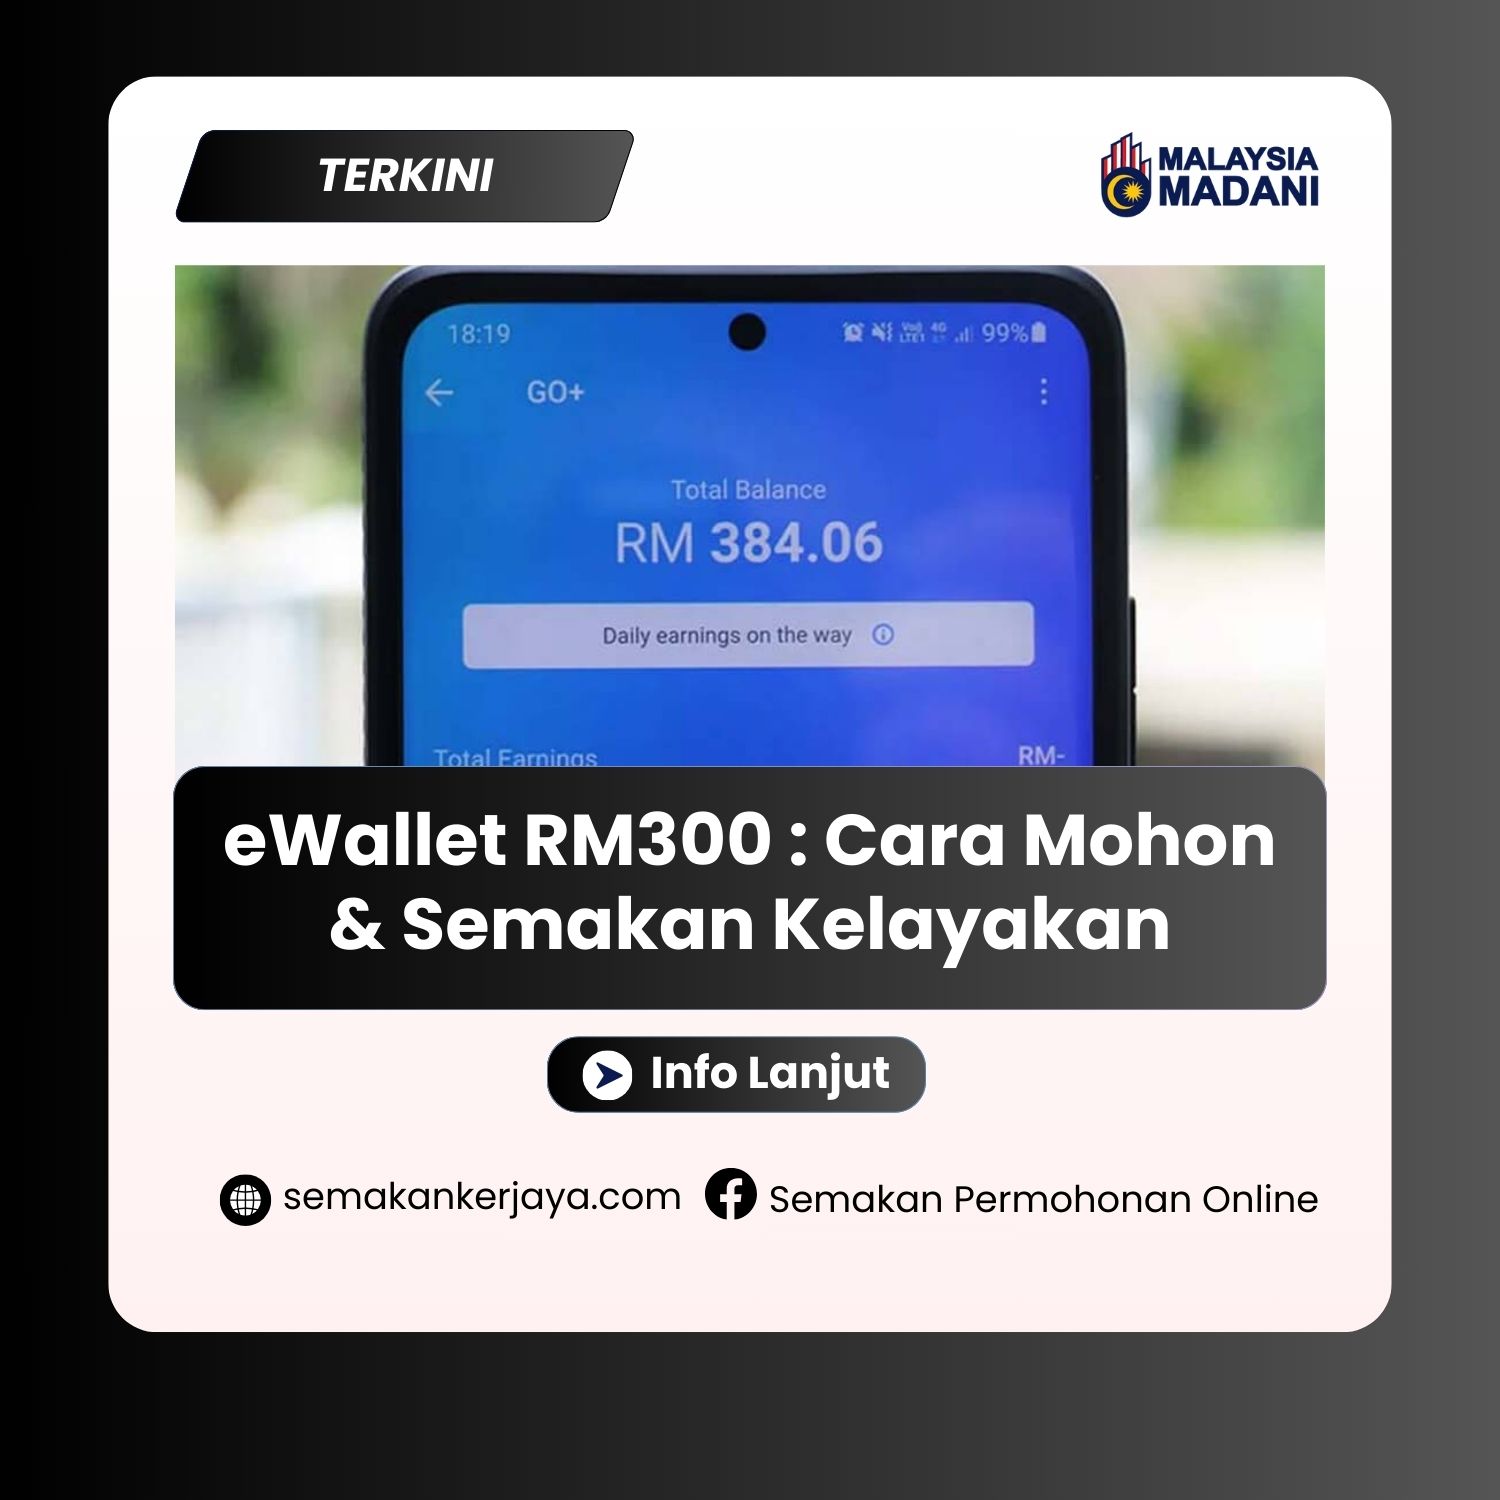 eWallet RM300